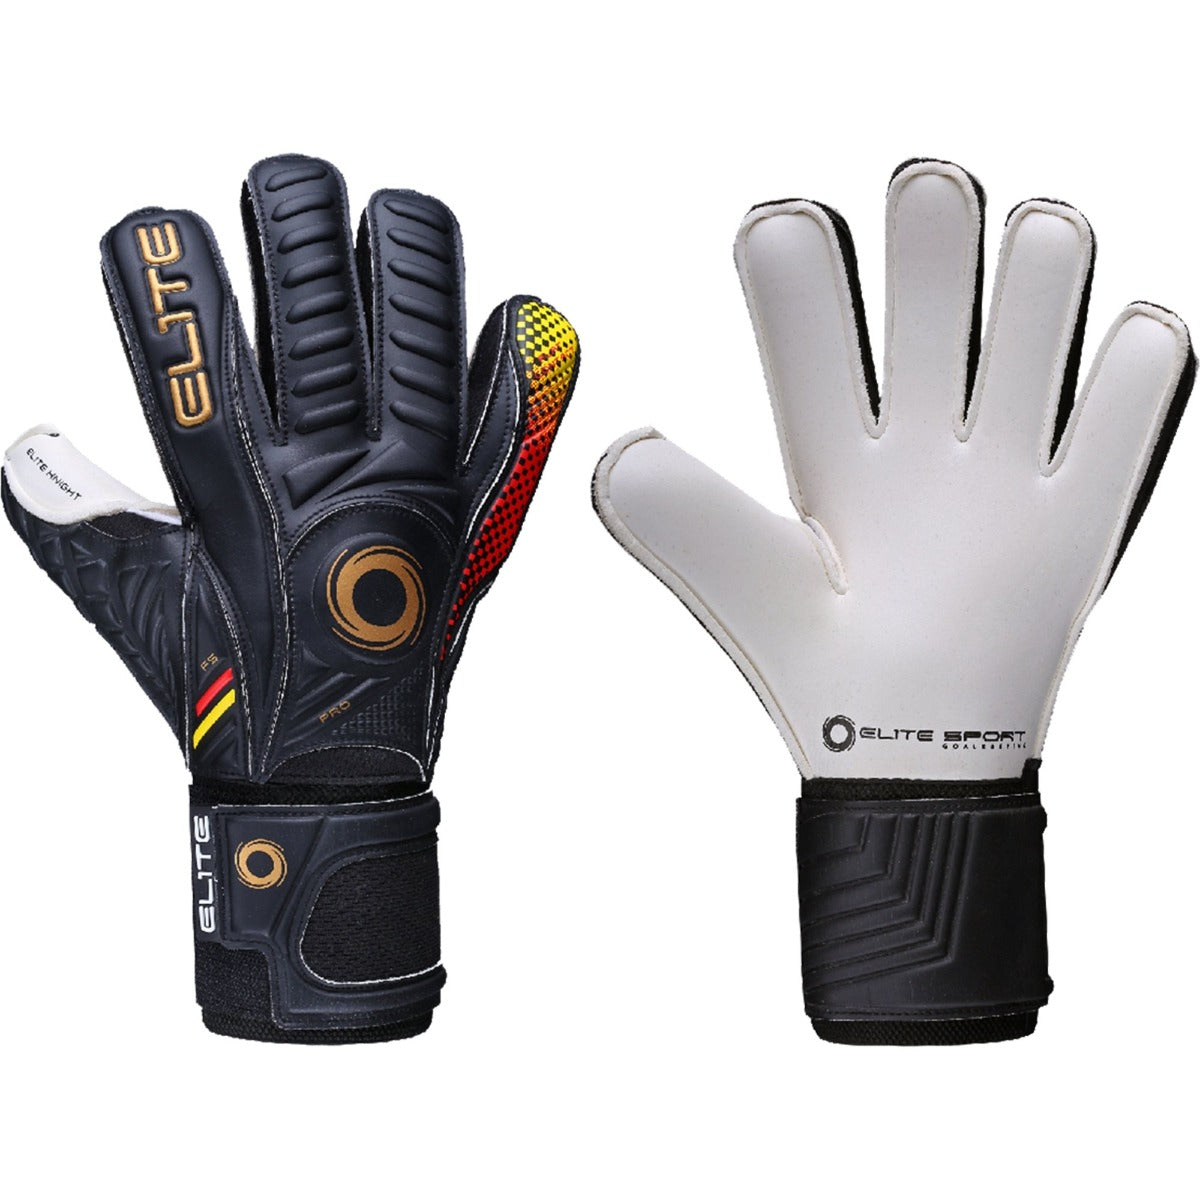 Elite Sport Knight Goalkeeper Gloves - Black-Red-Yellow (Pair)